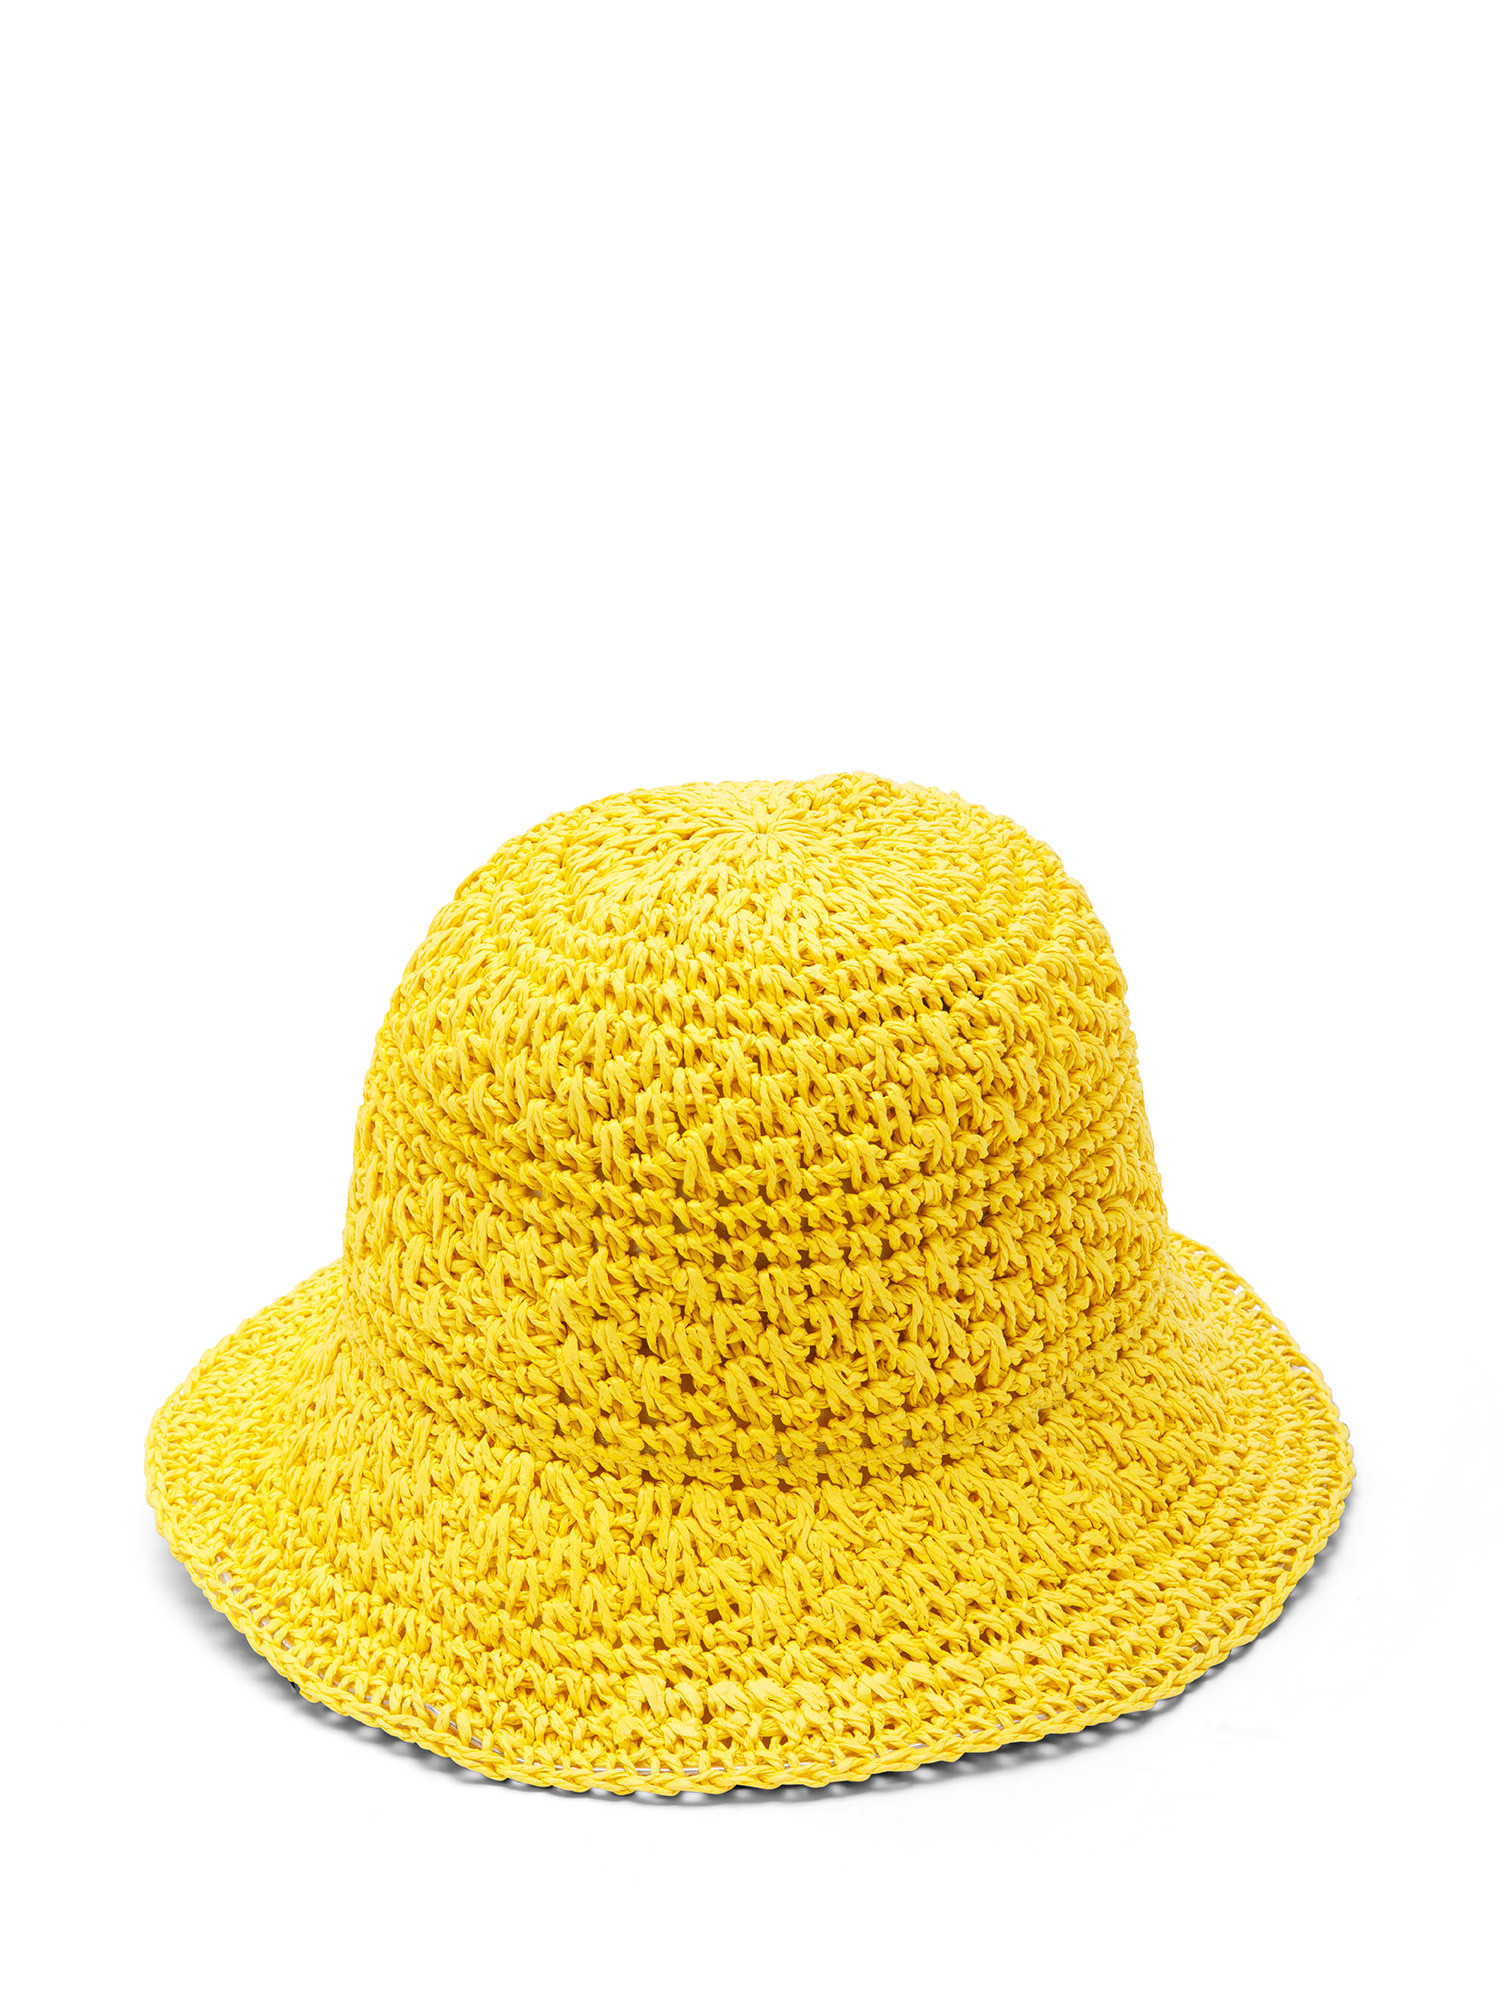 Koan - Braided hat, Yellow, large image number 0